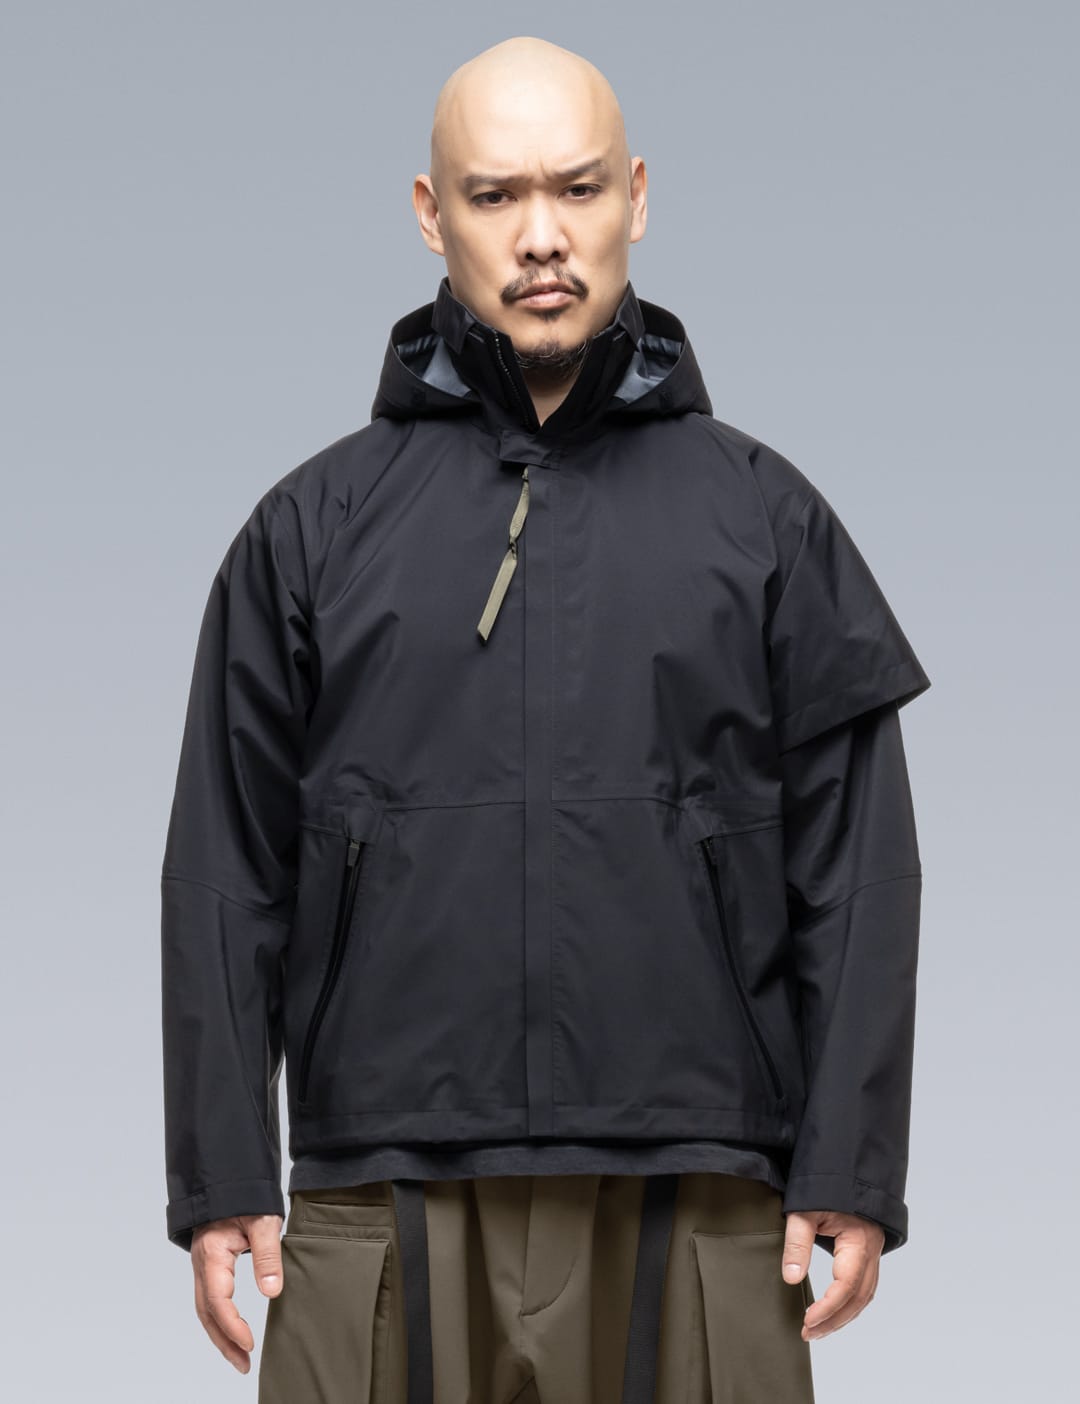 Human Made - MA-1 Jacket | HBX - Globally Curated Fashion and 